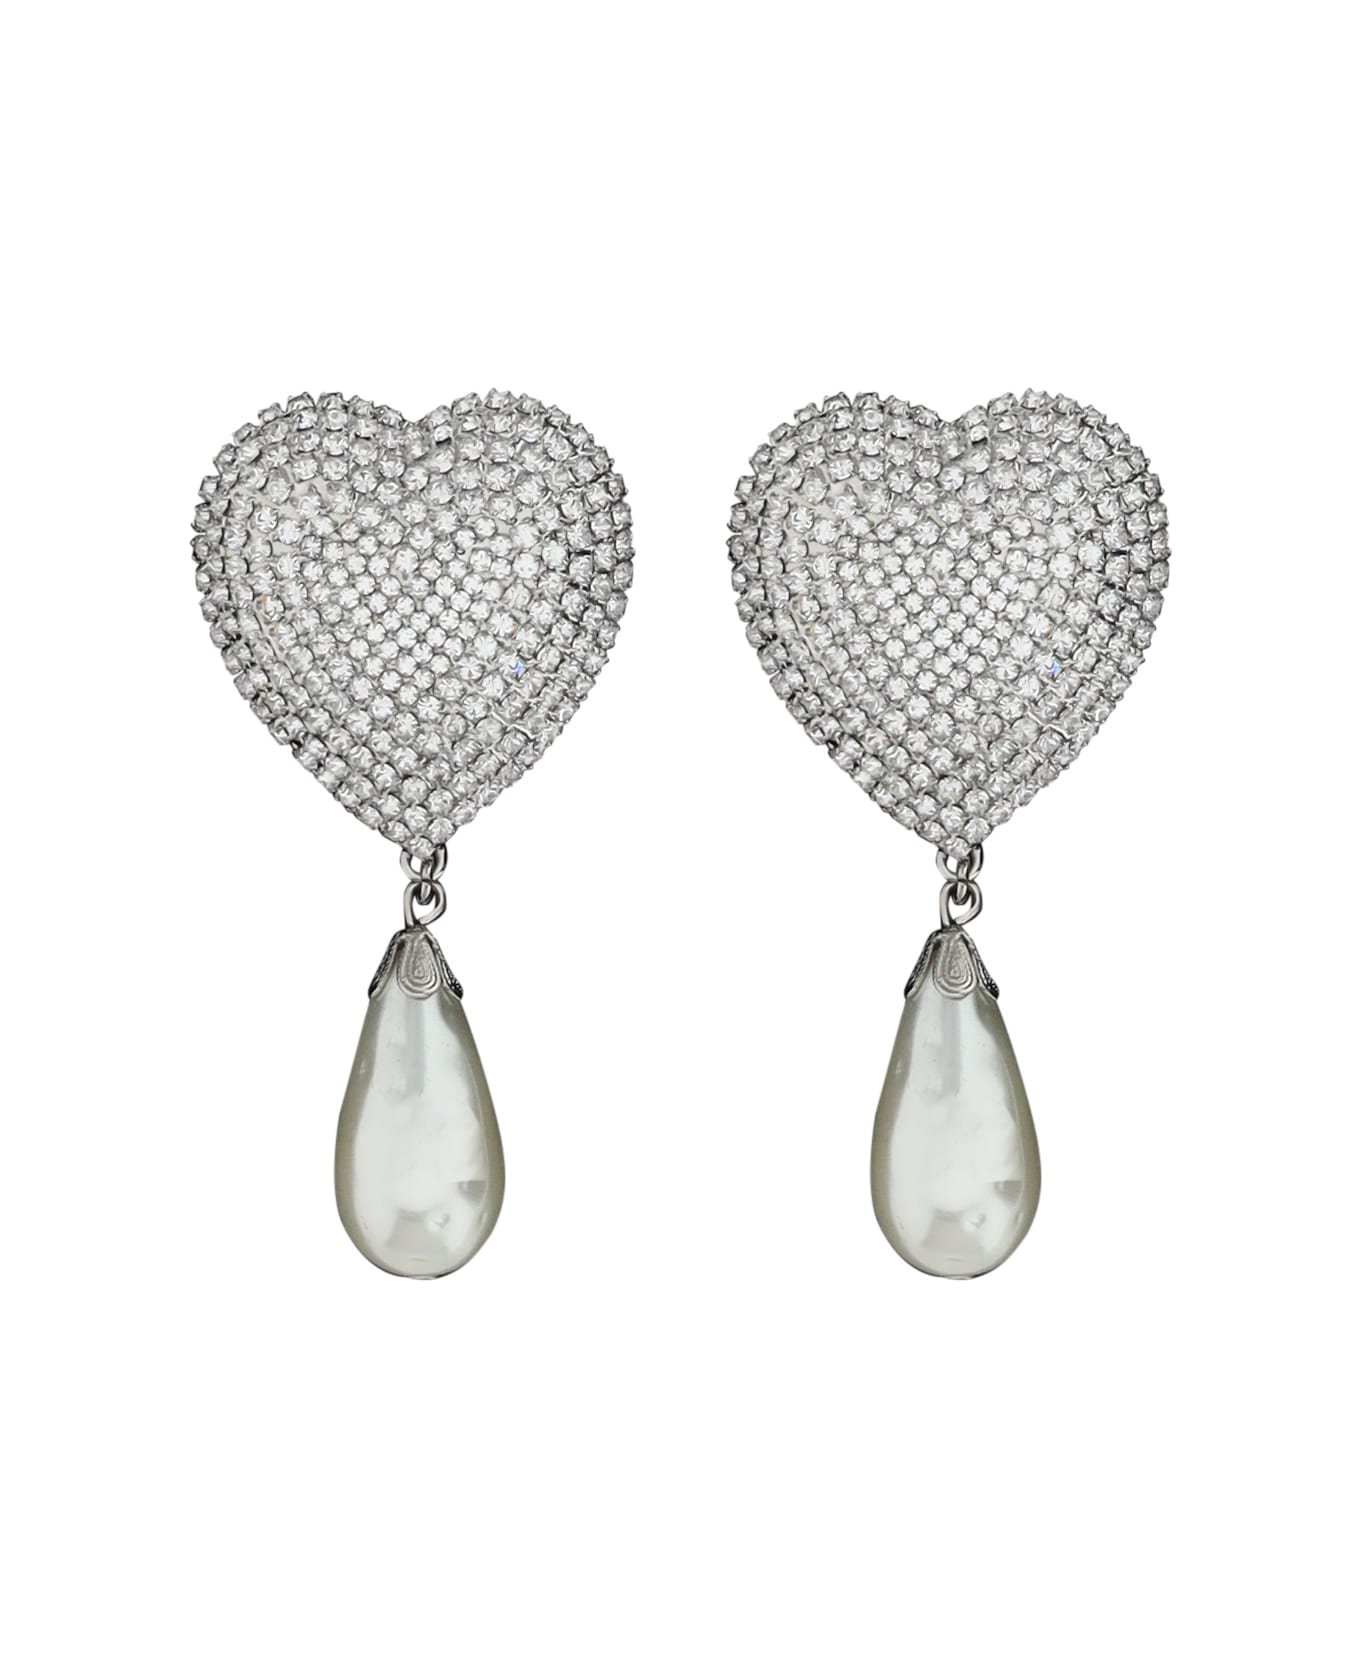 Alessandra Rich Heart Earrings - Cry-silver イヤリング